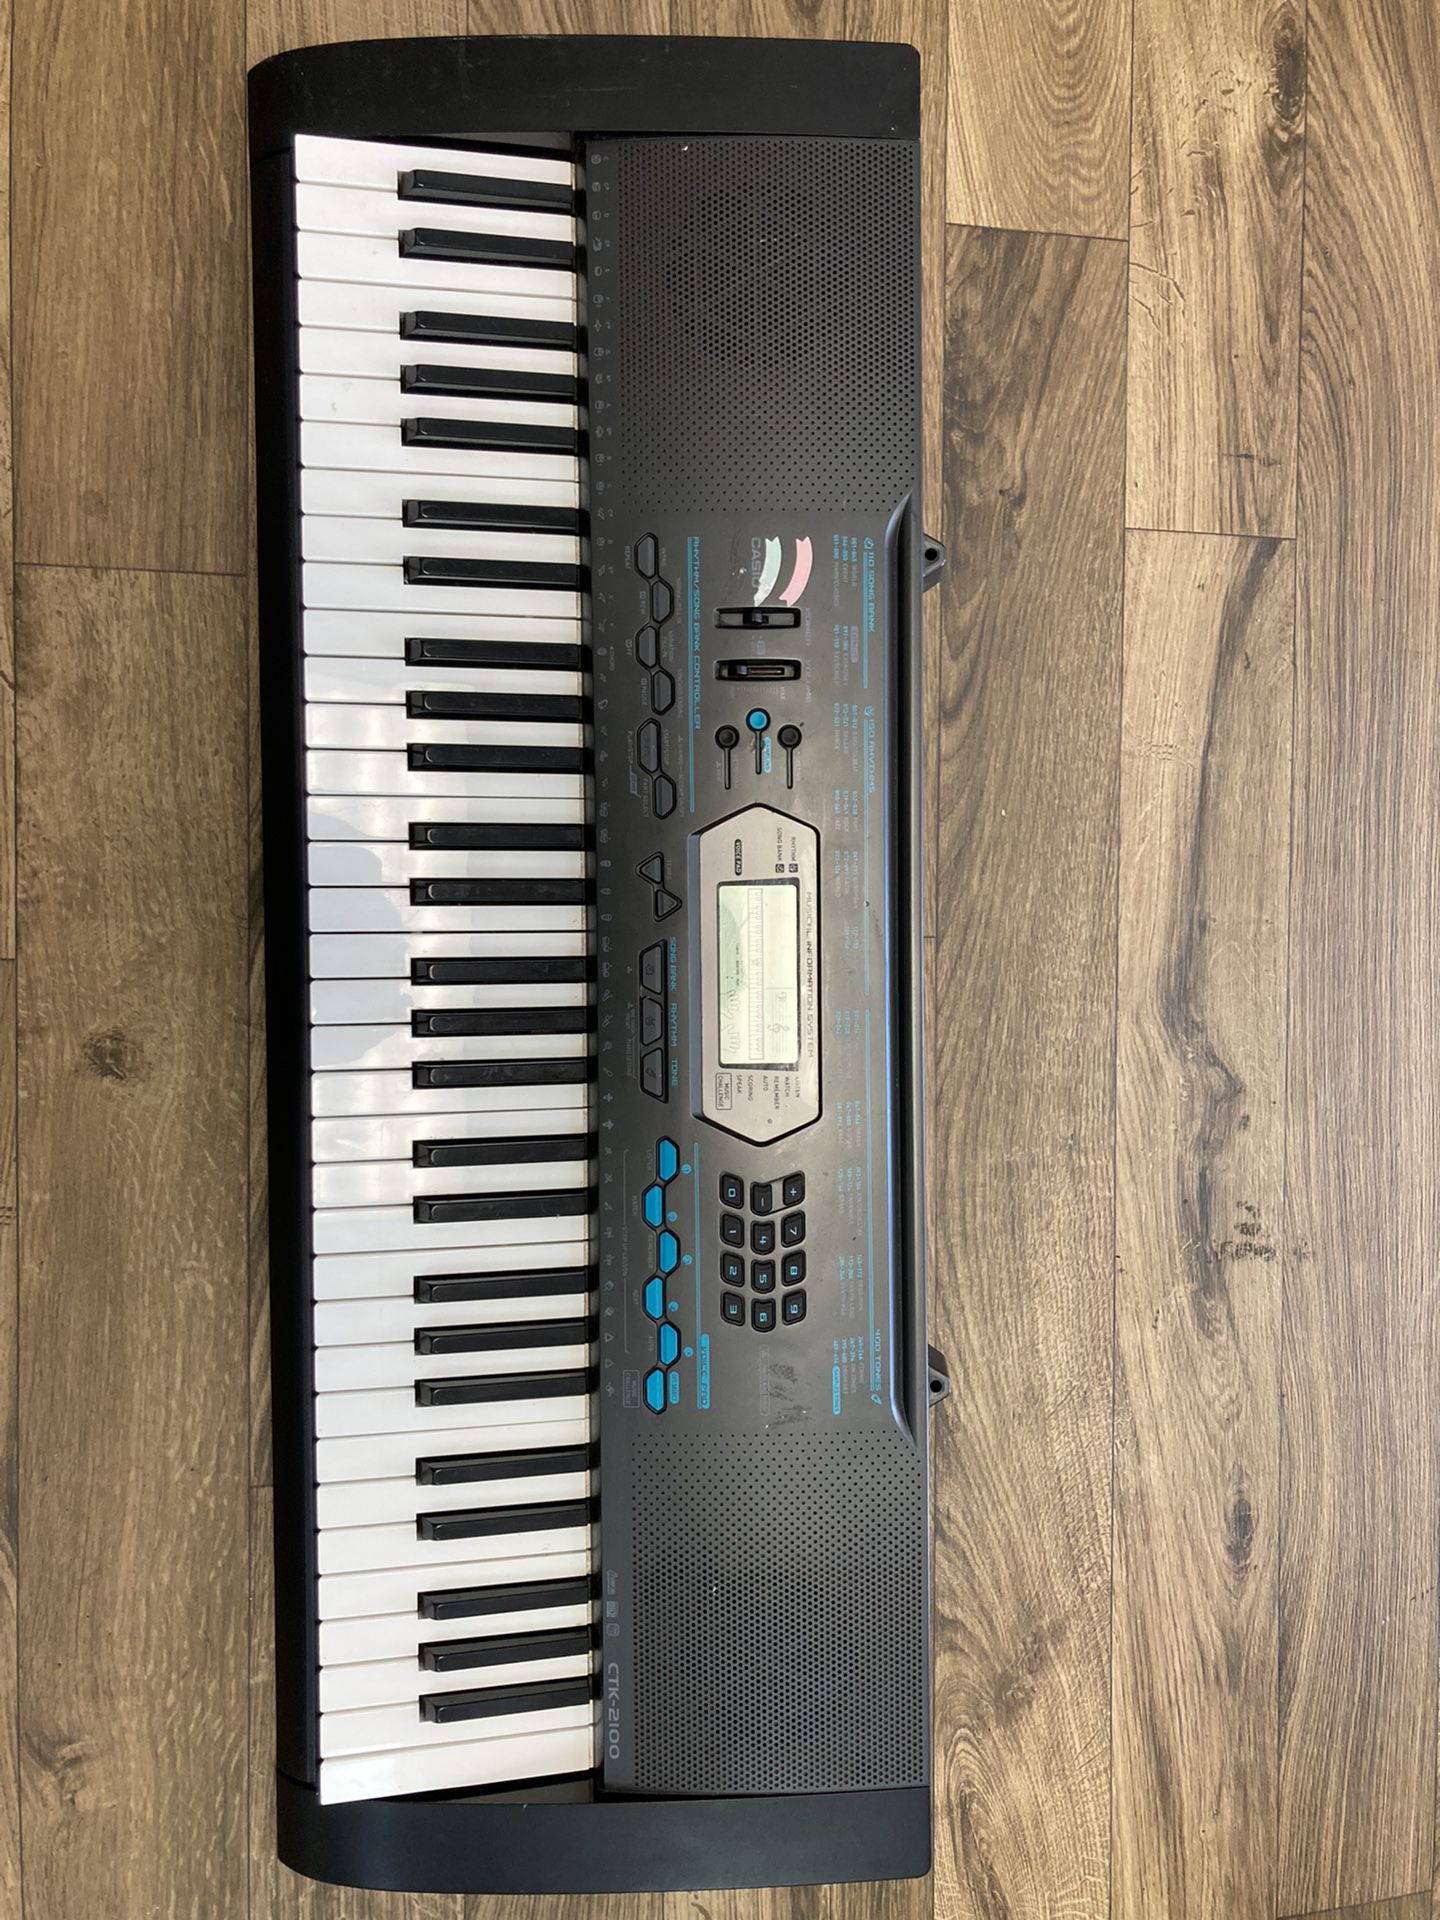 Casio Portable Electrical Piano Keyboard 